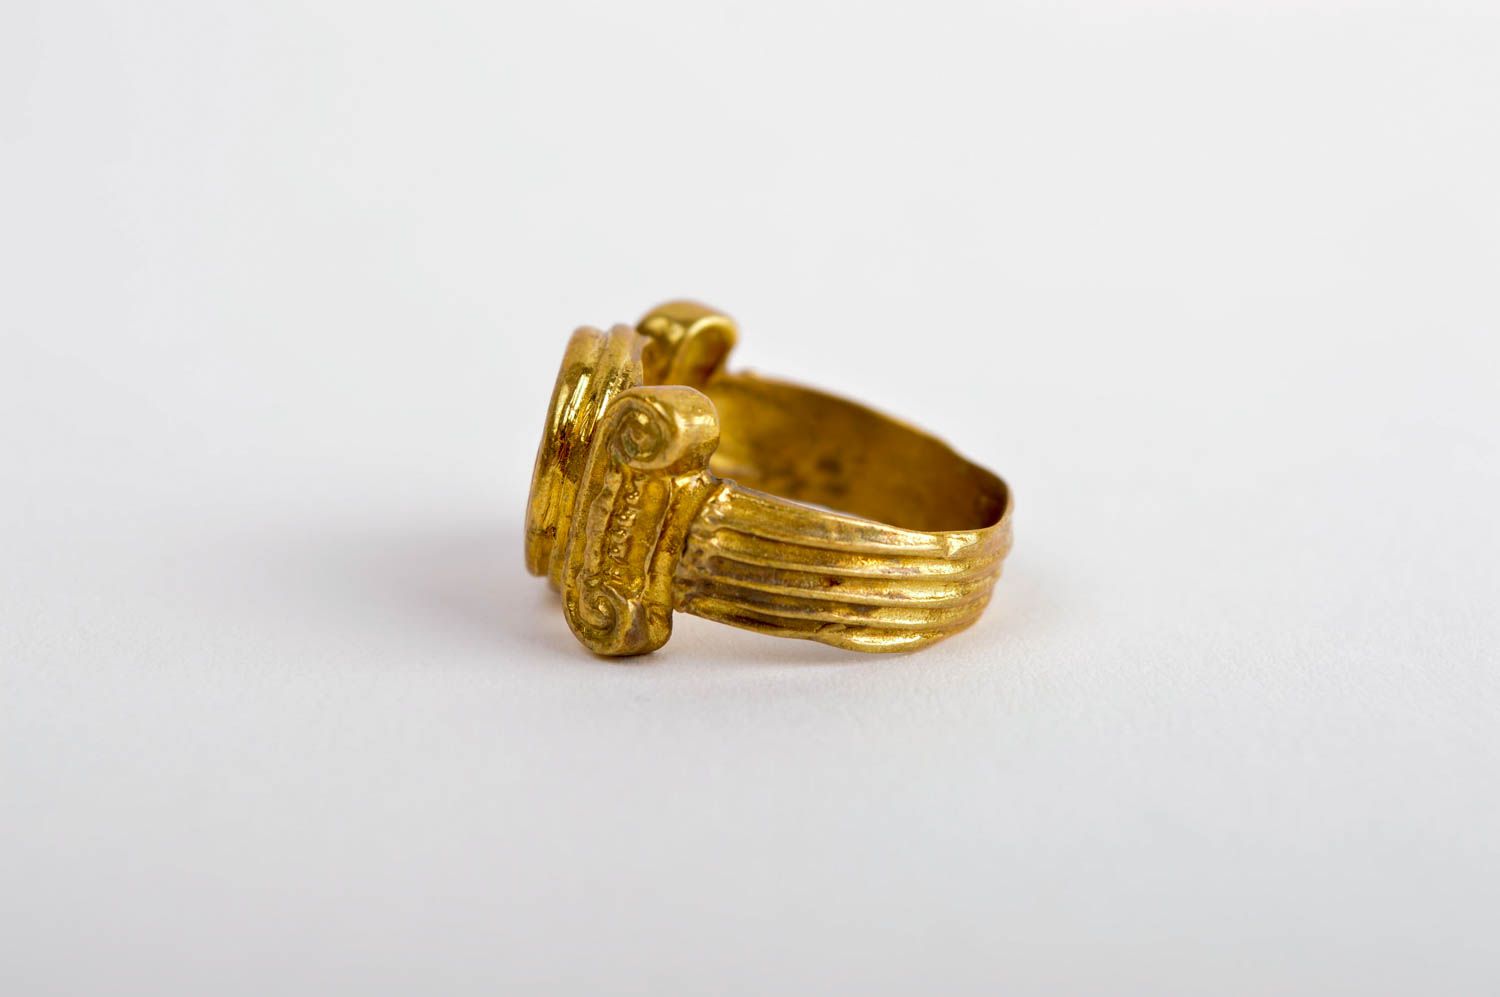 Unusual handmade metal ring stylish brass ring modern jewelry designs gift ideas photo 4